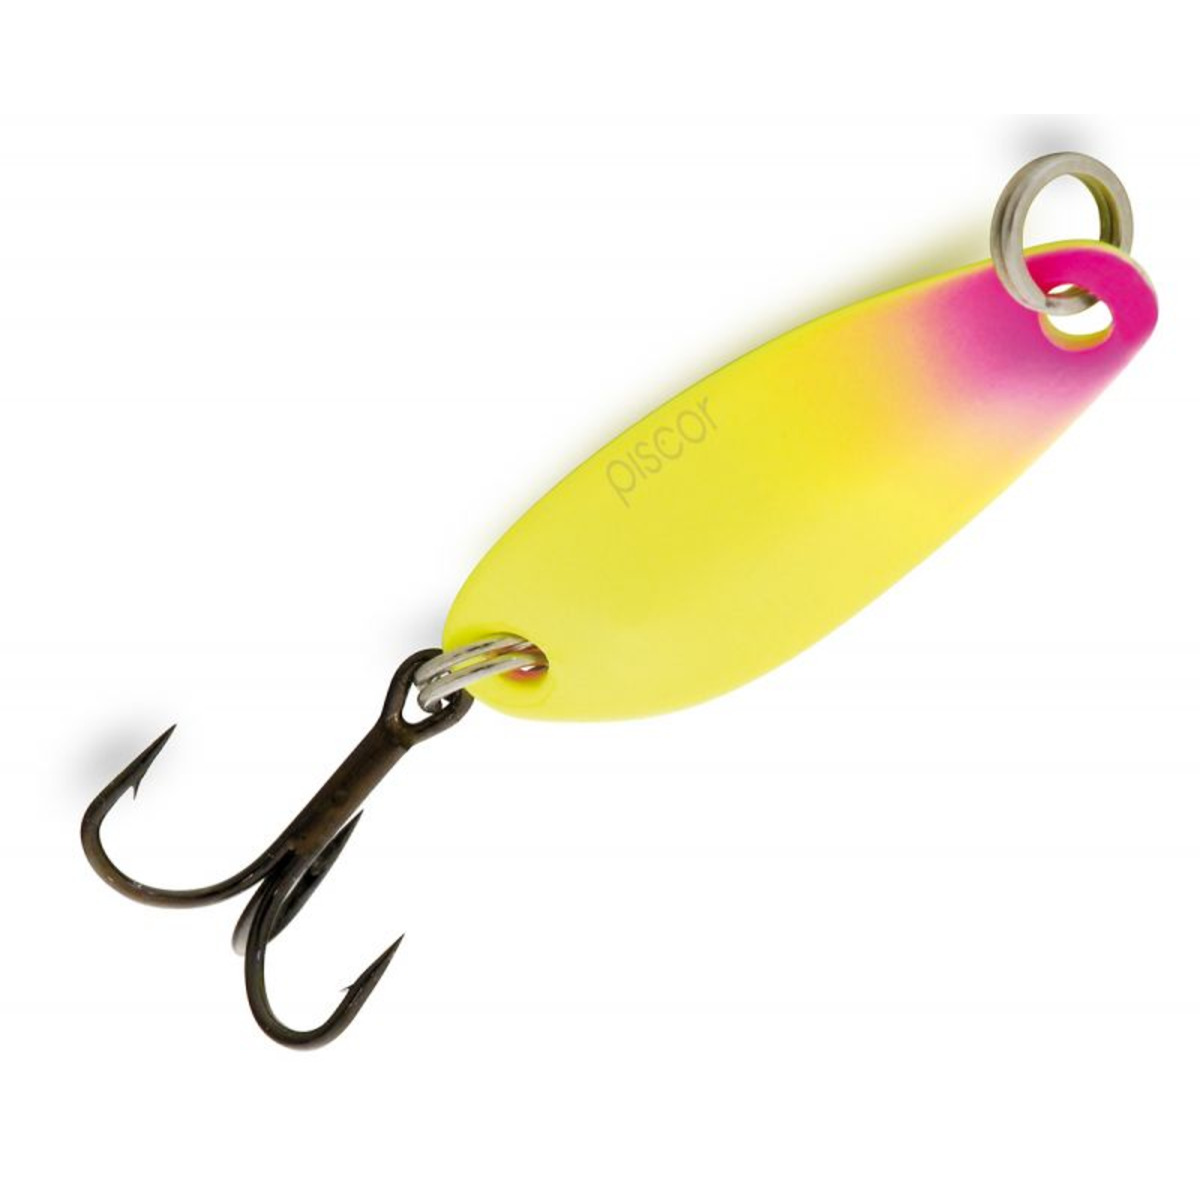 Seika Edge Spoon - 30 mm - 2.50 g - Yellow-Fluo Pink         